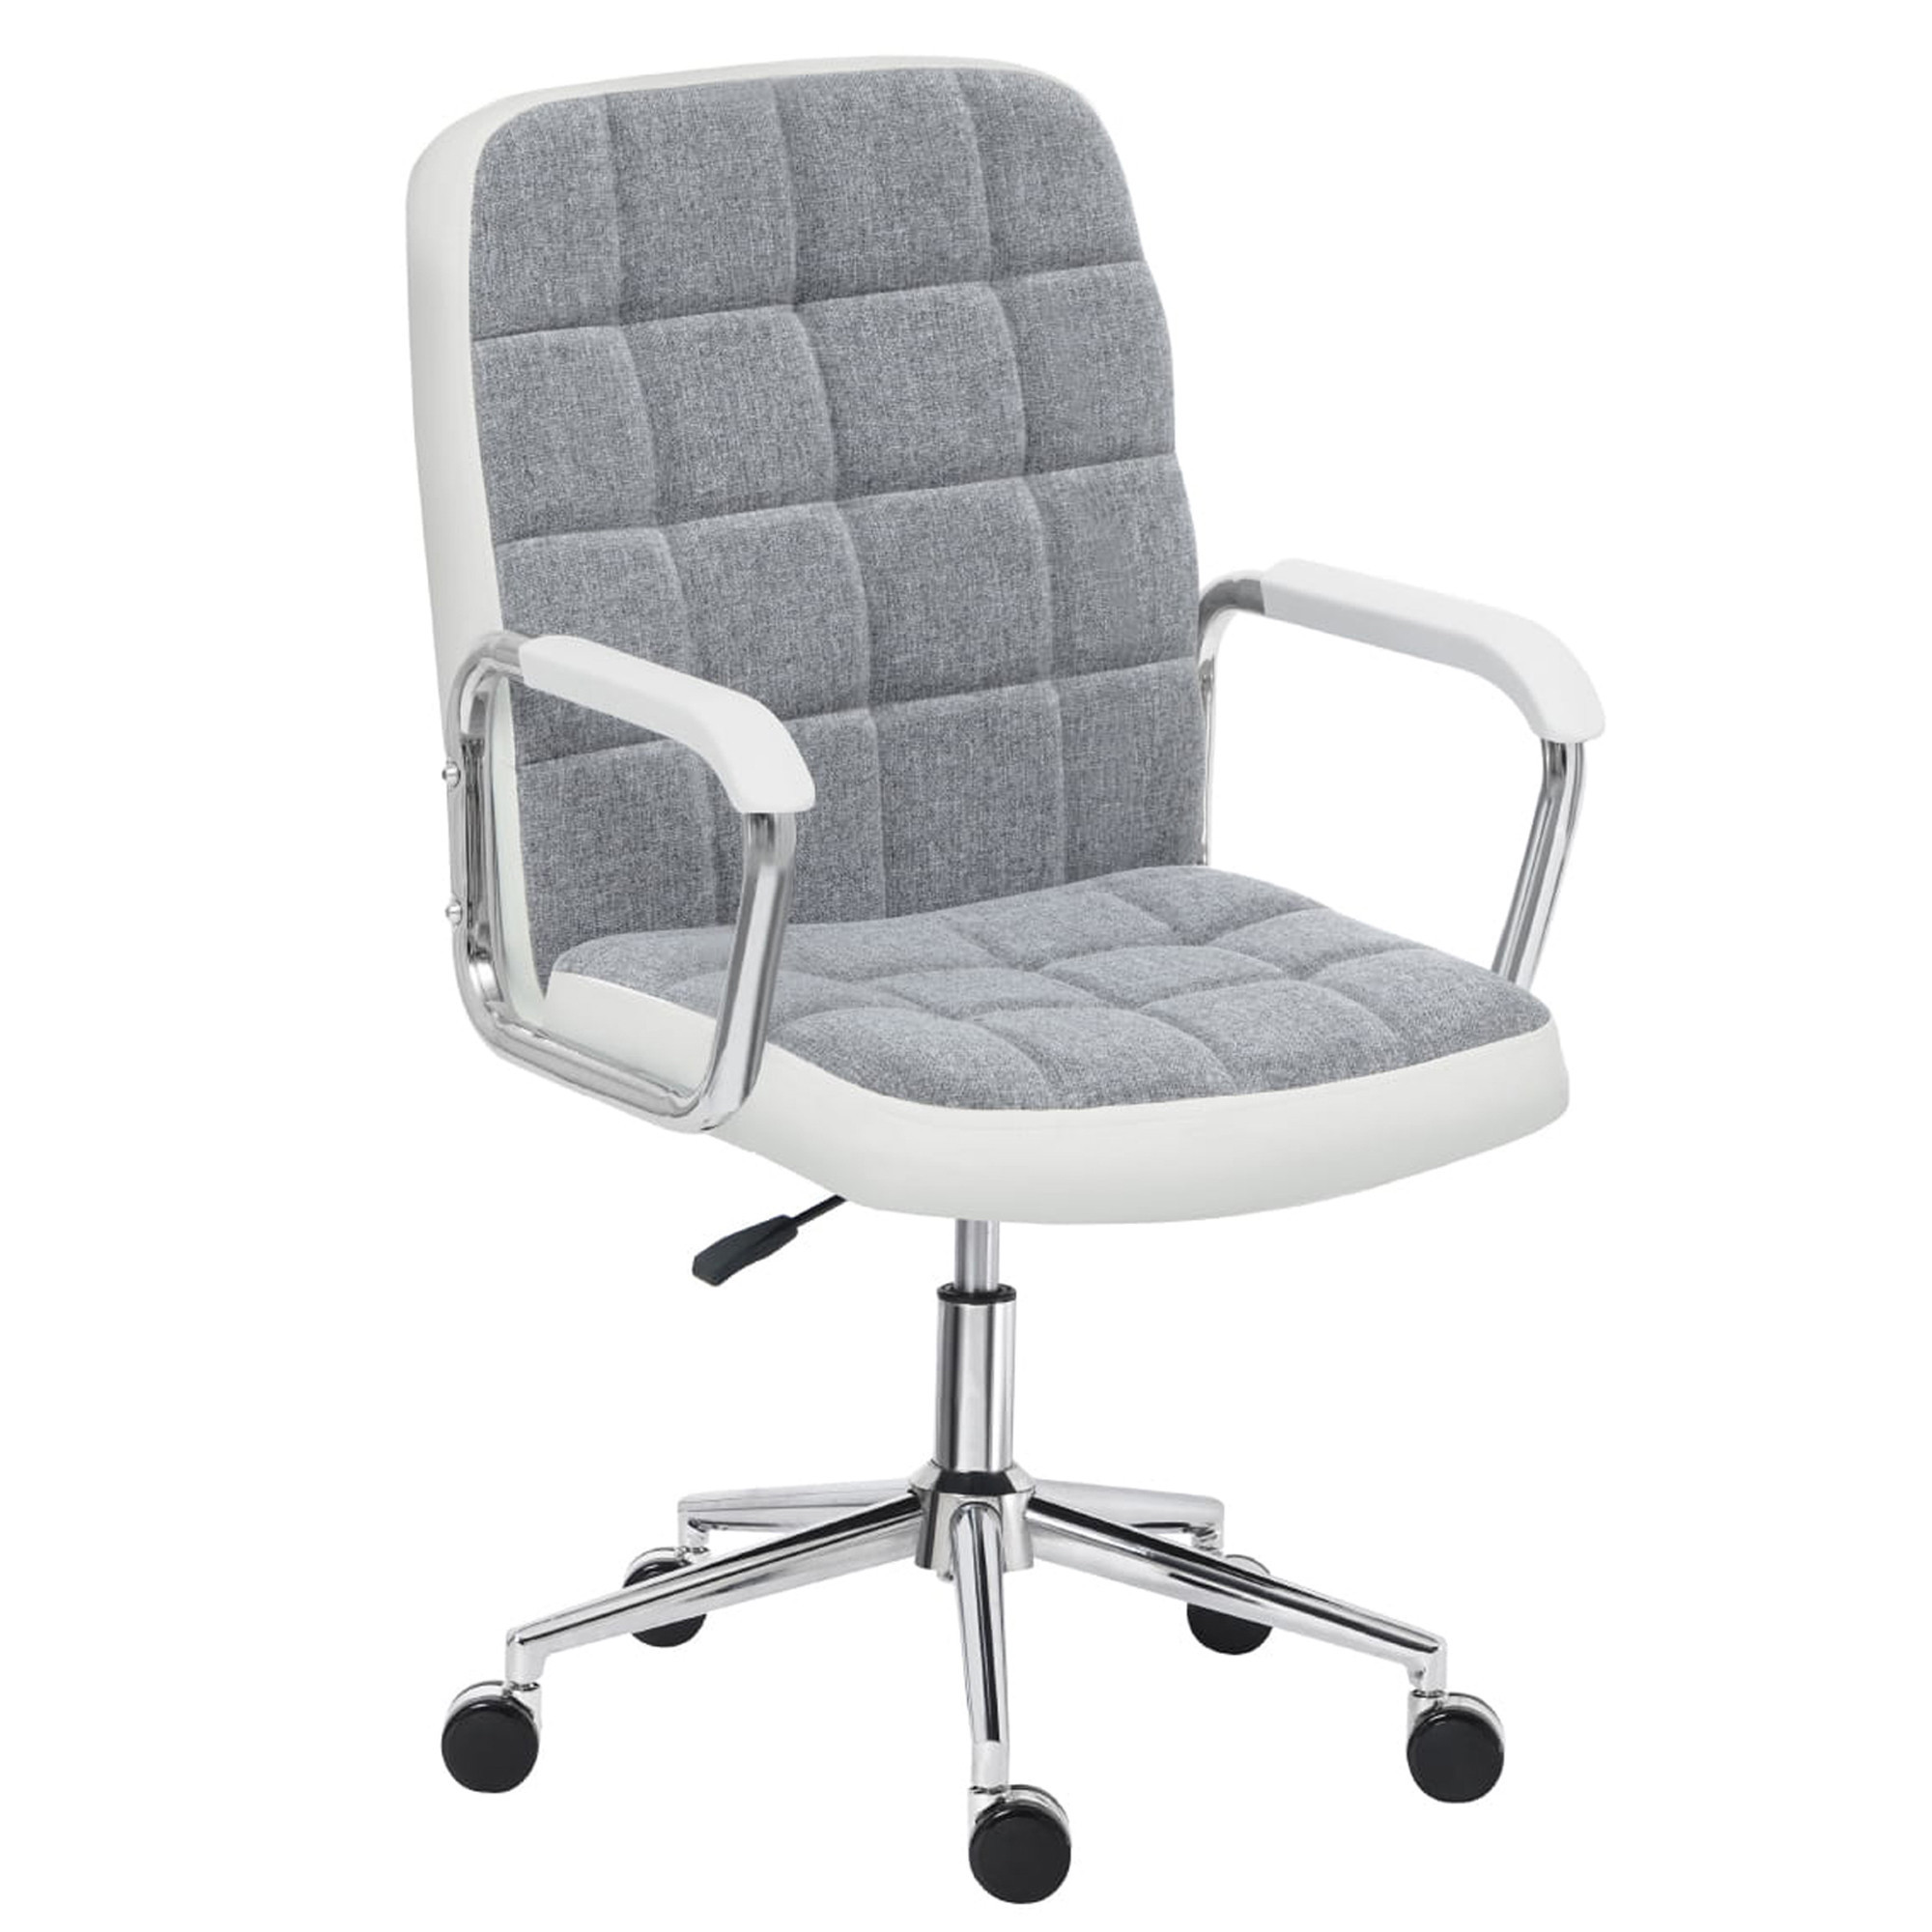 Kancelářská židle Mark Adler - Future 4.0 šedá mesh